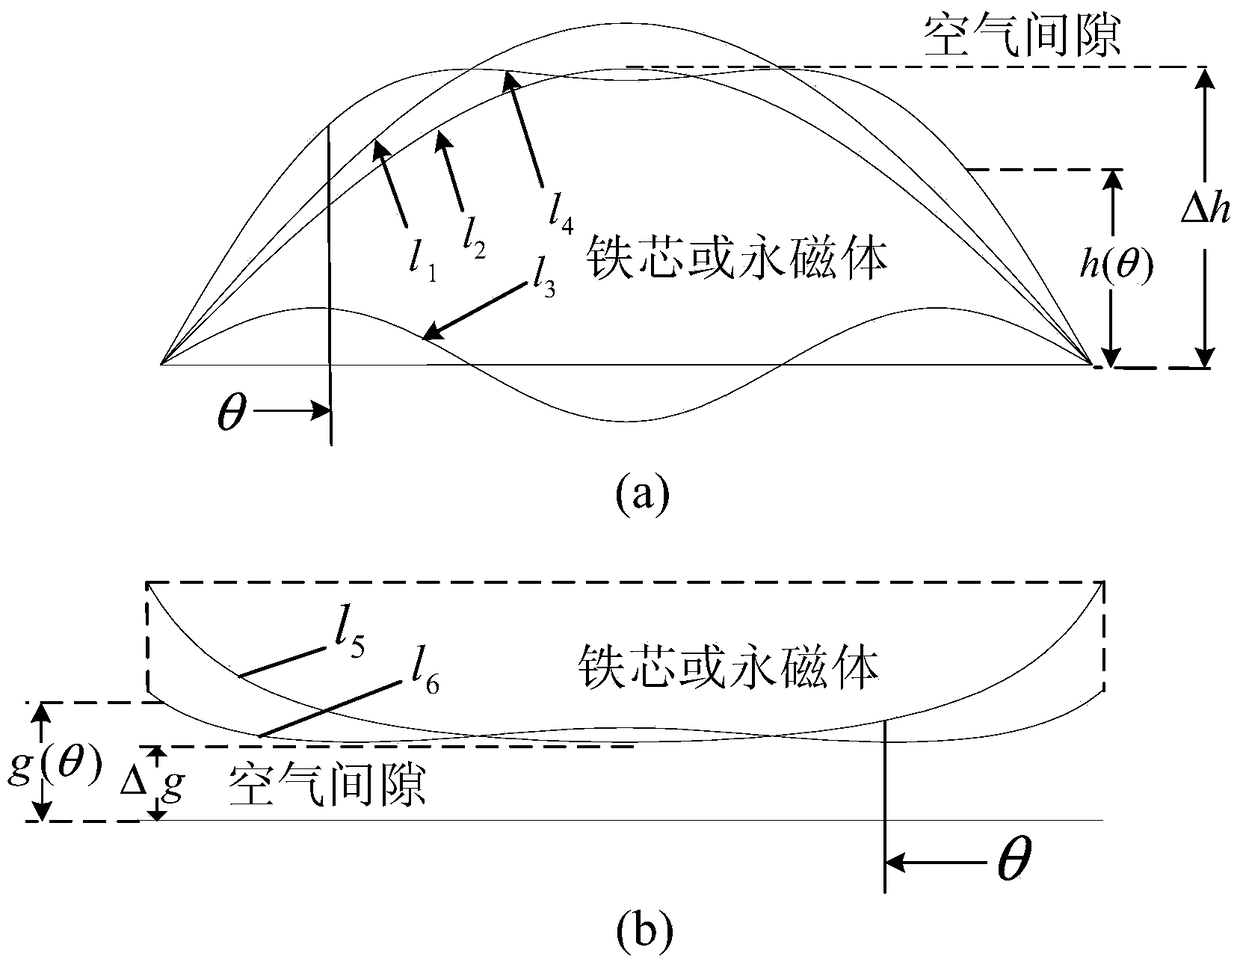 Harmonic cutting method of permanent magnet fault-tolerant motor